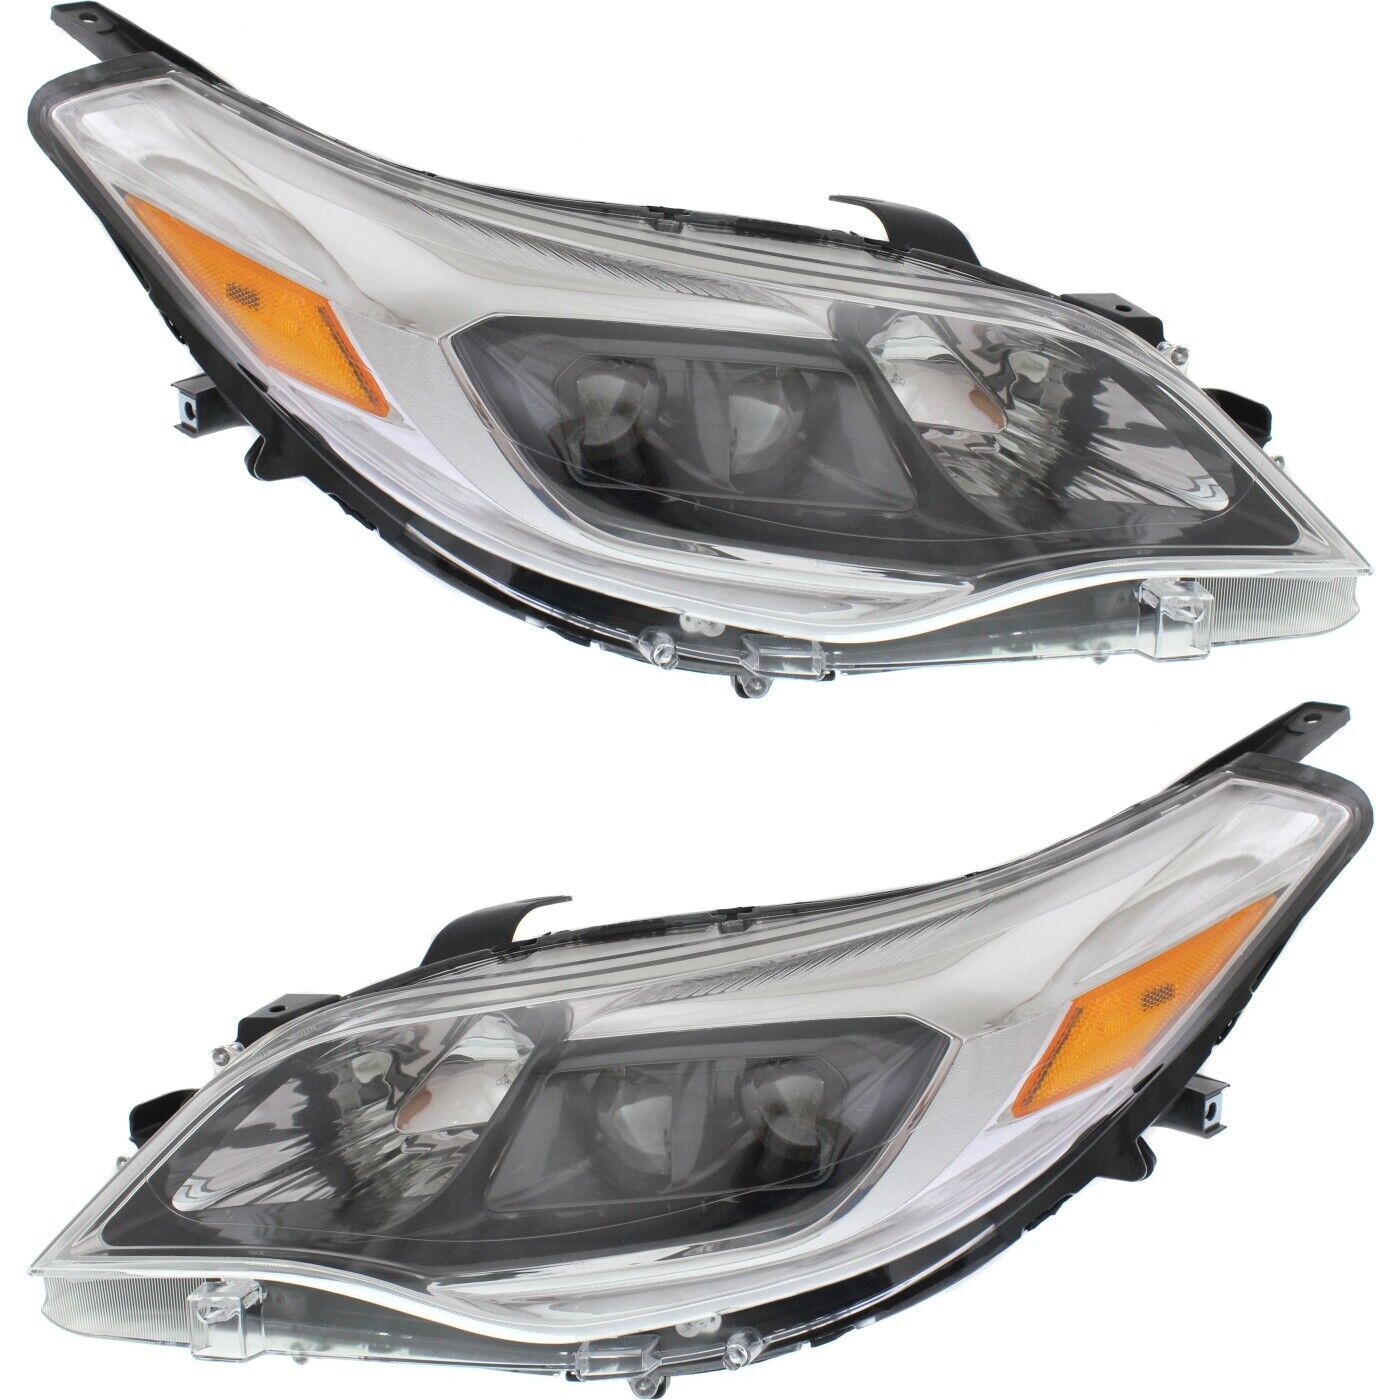 Headlight Set For 2013-2015 Toyota Avalon Driver and Passenger Side w/ bulb